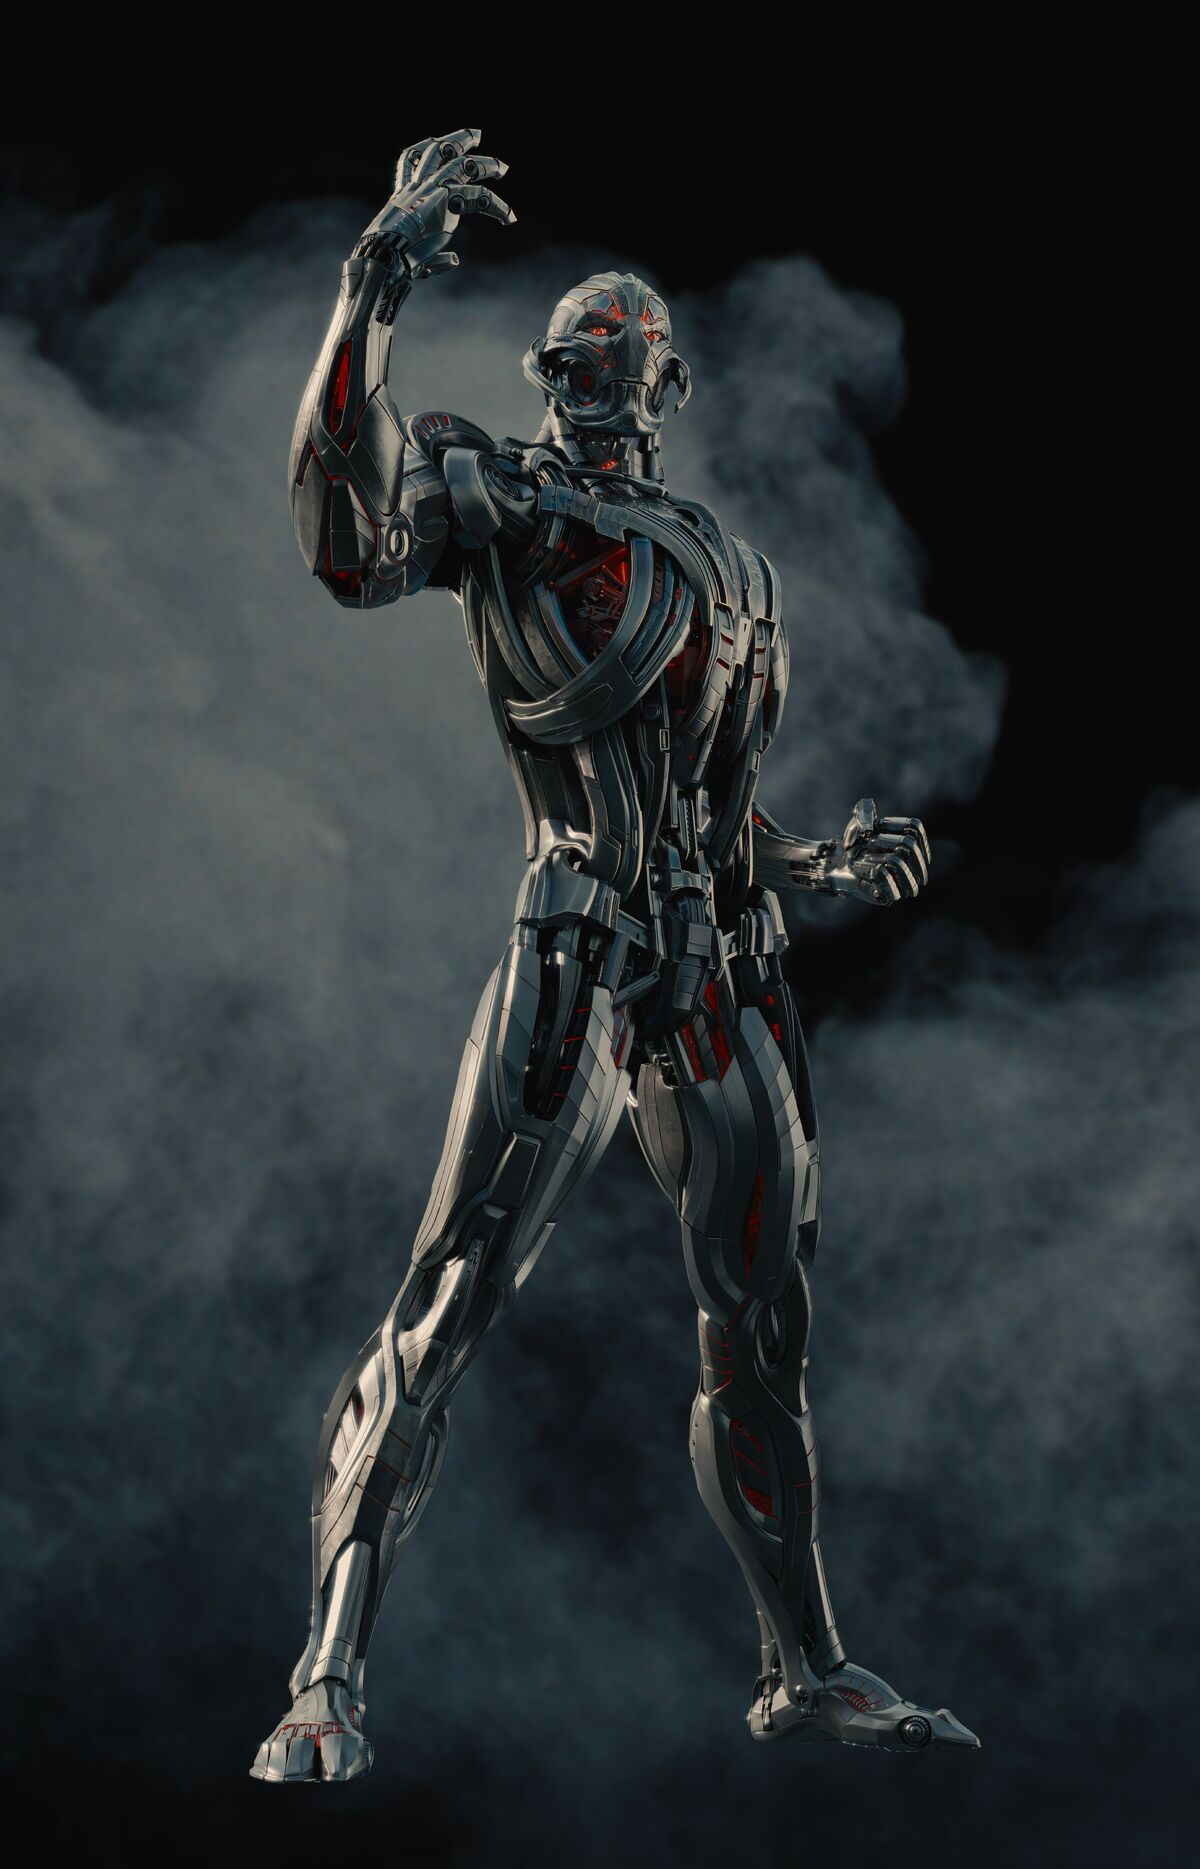 Erik Killmonger (Marvel Cinematic Universe), Villains Wiki, Fandom